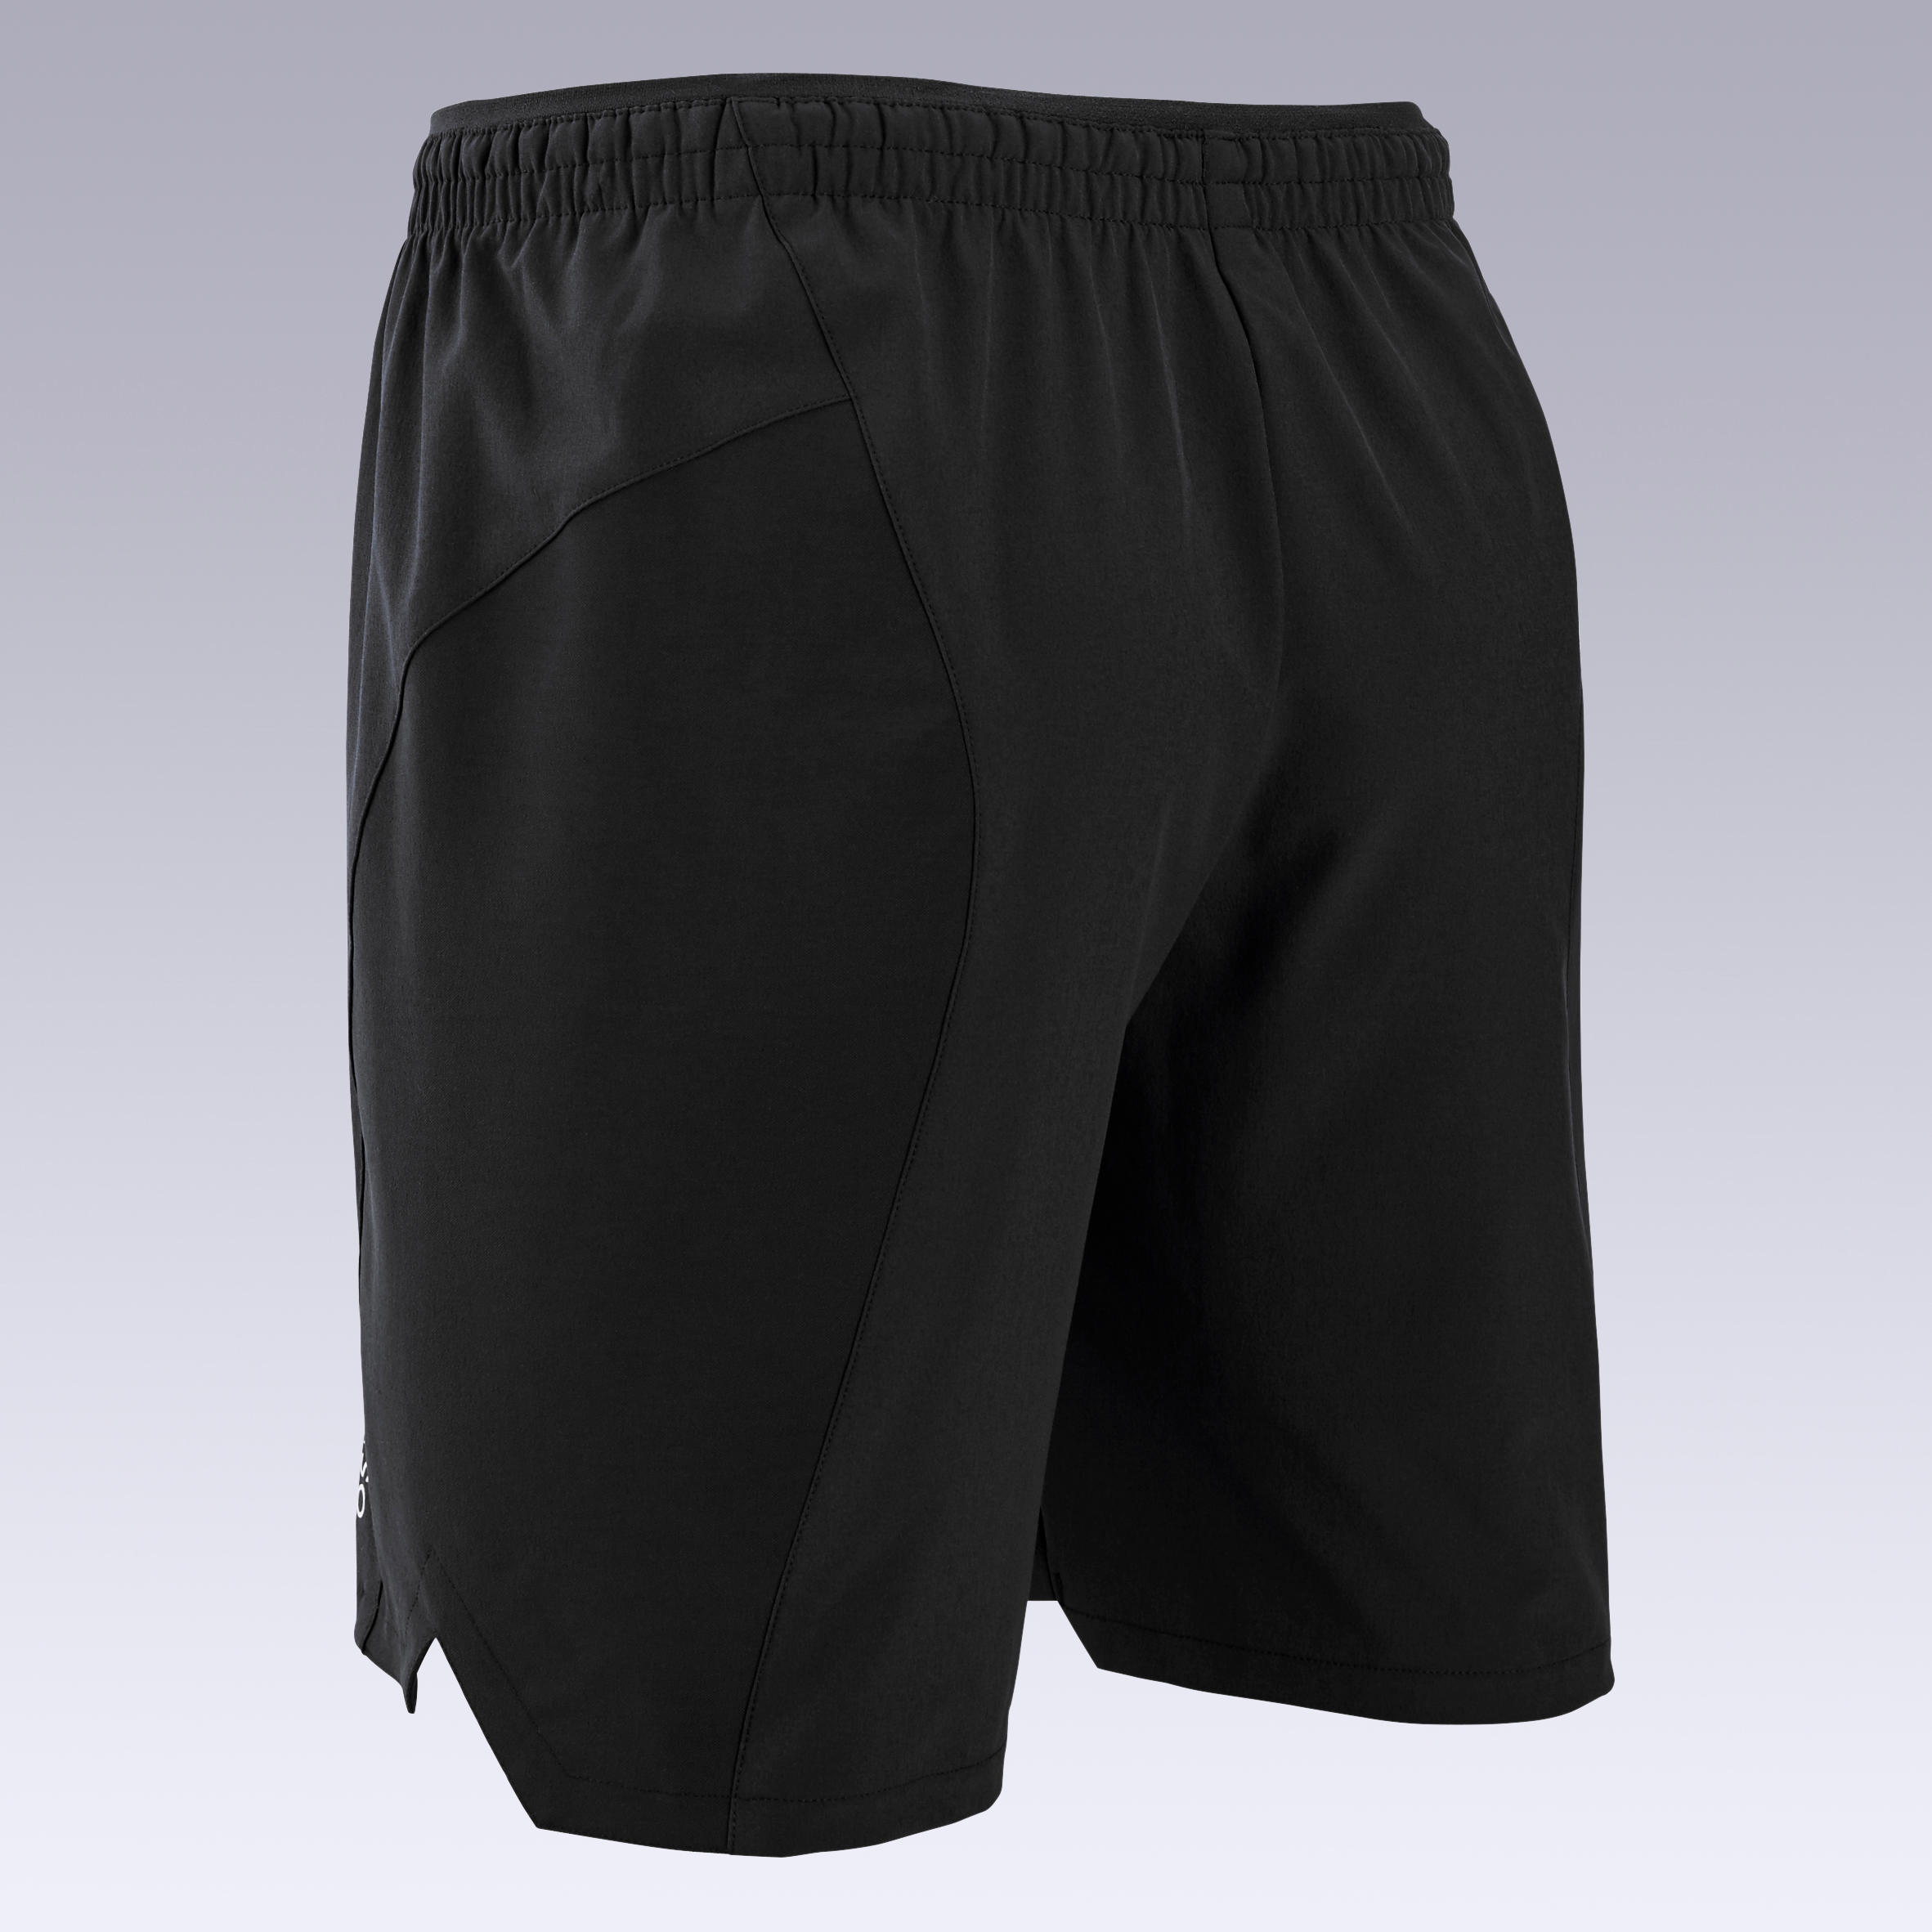 Men's Futsal Shorts - Black 7/8